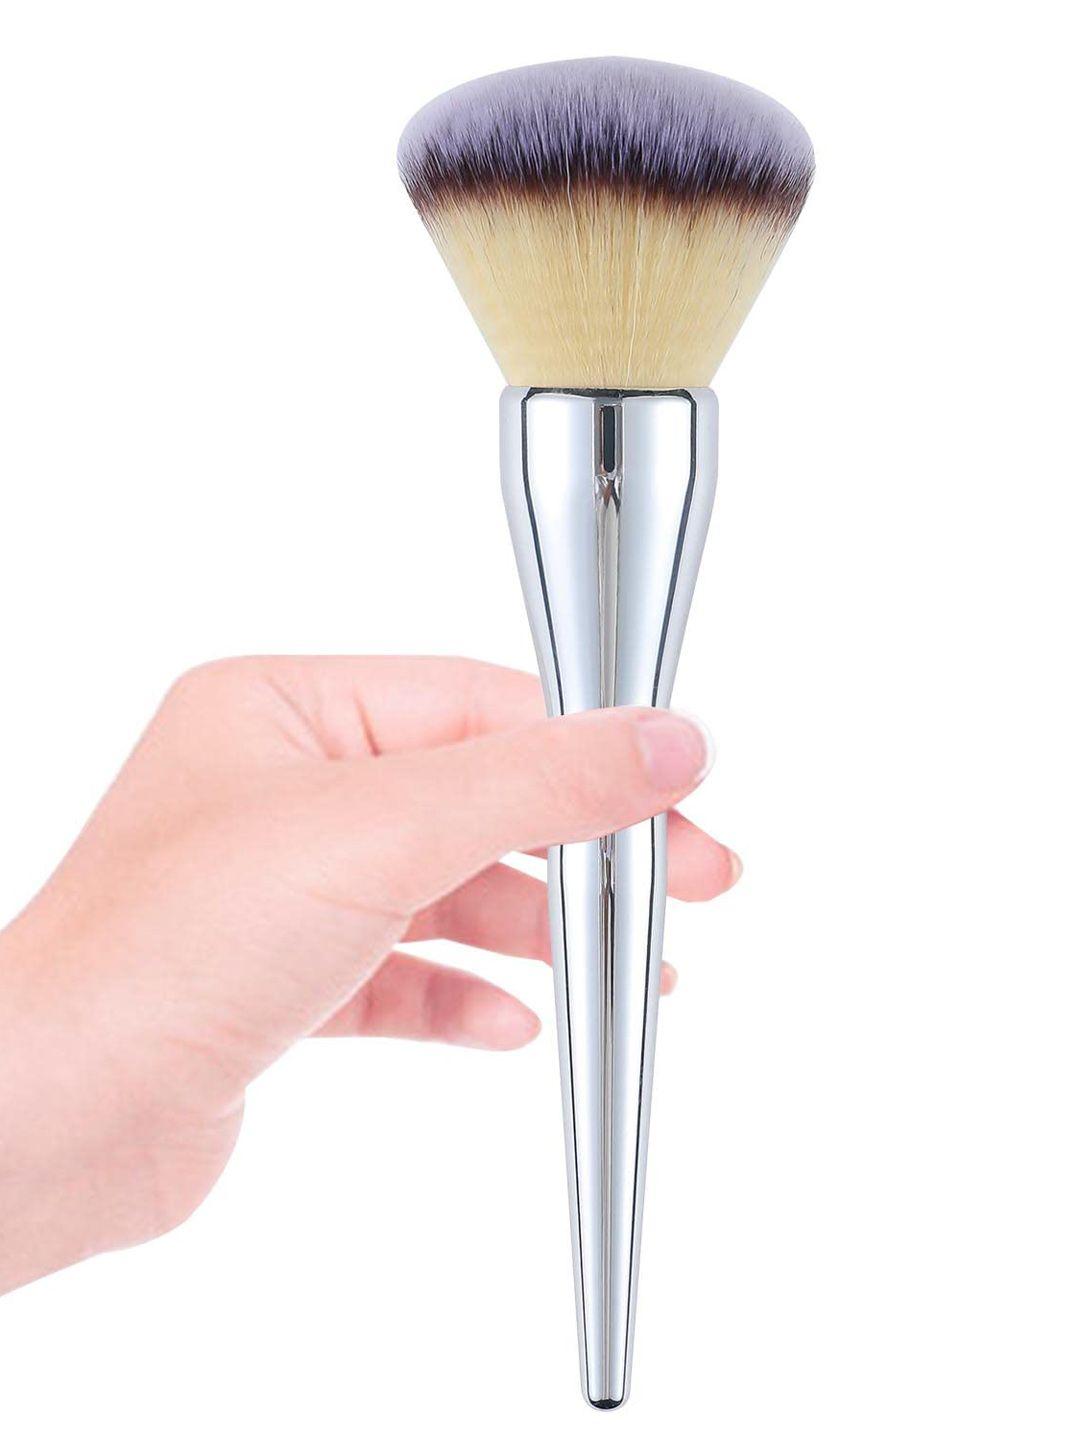 majestique makeup foundation blush brush for blending liquid